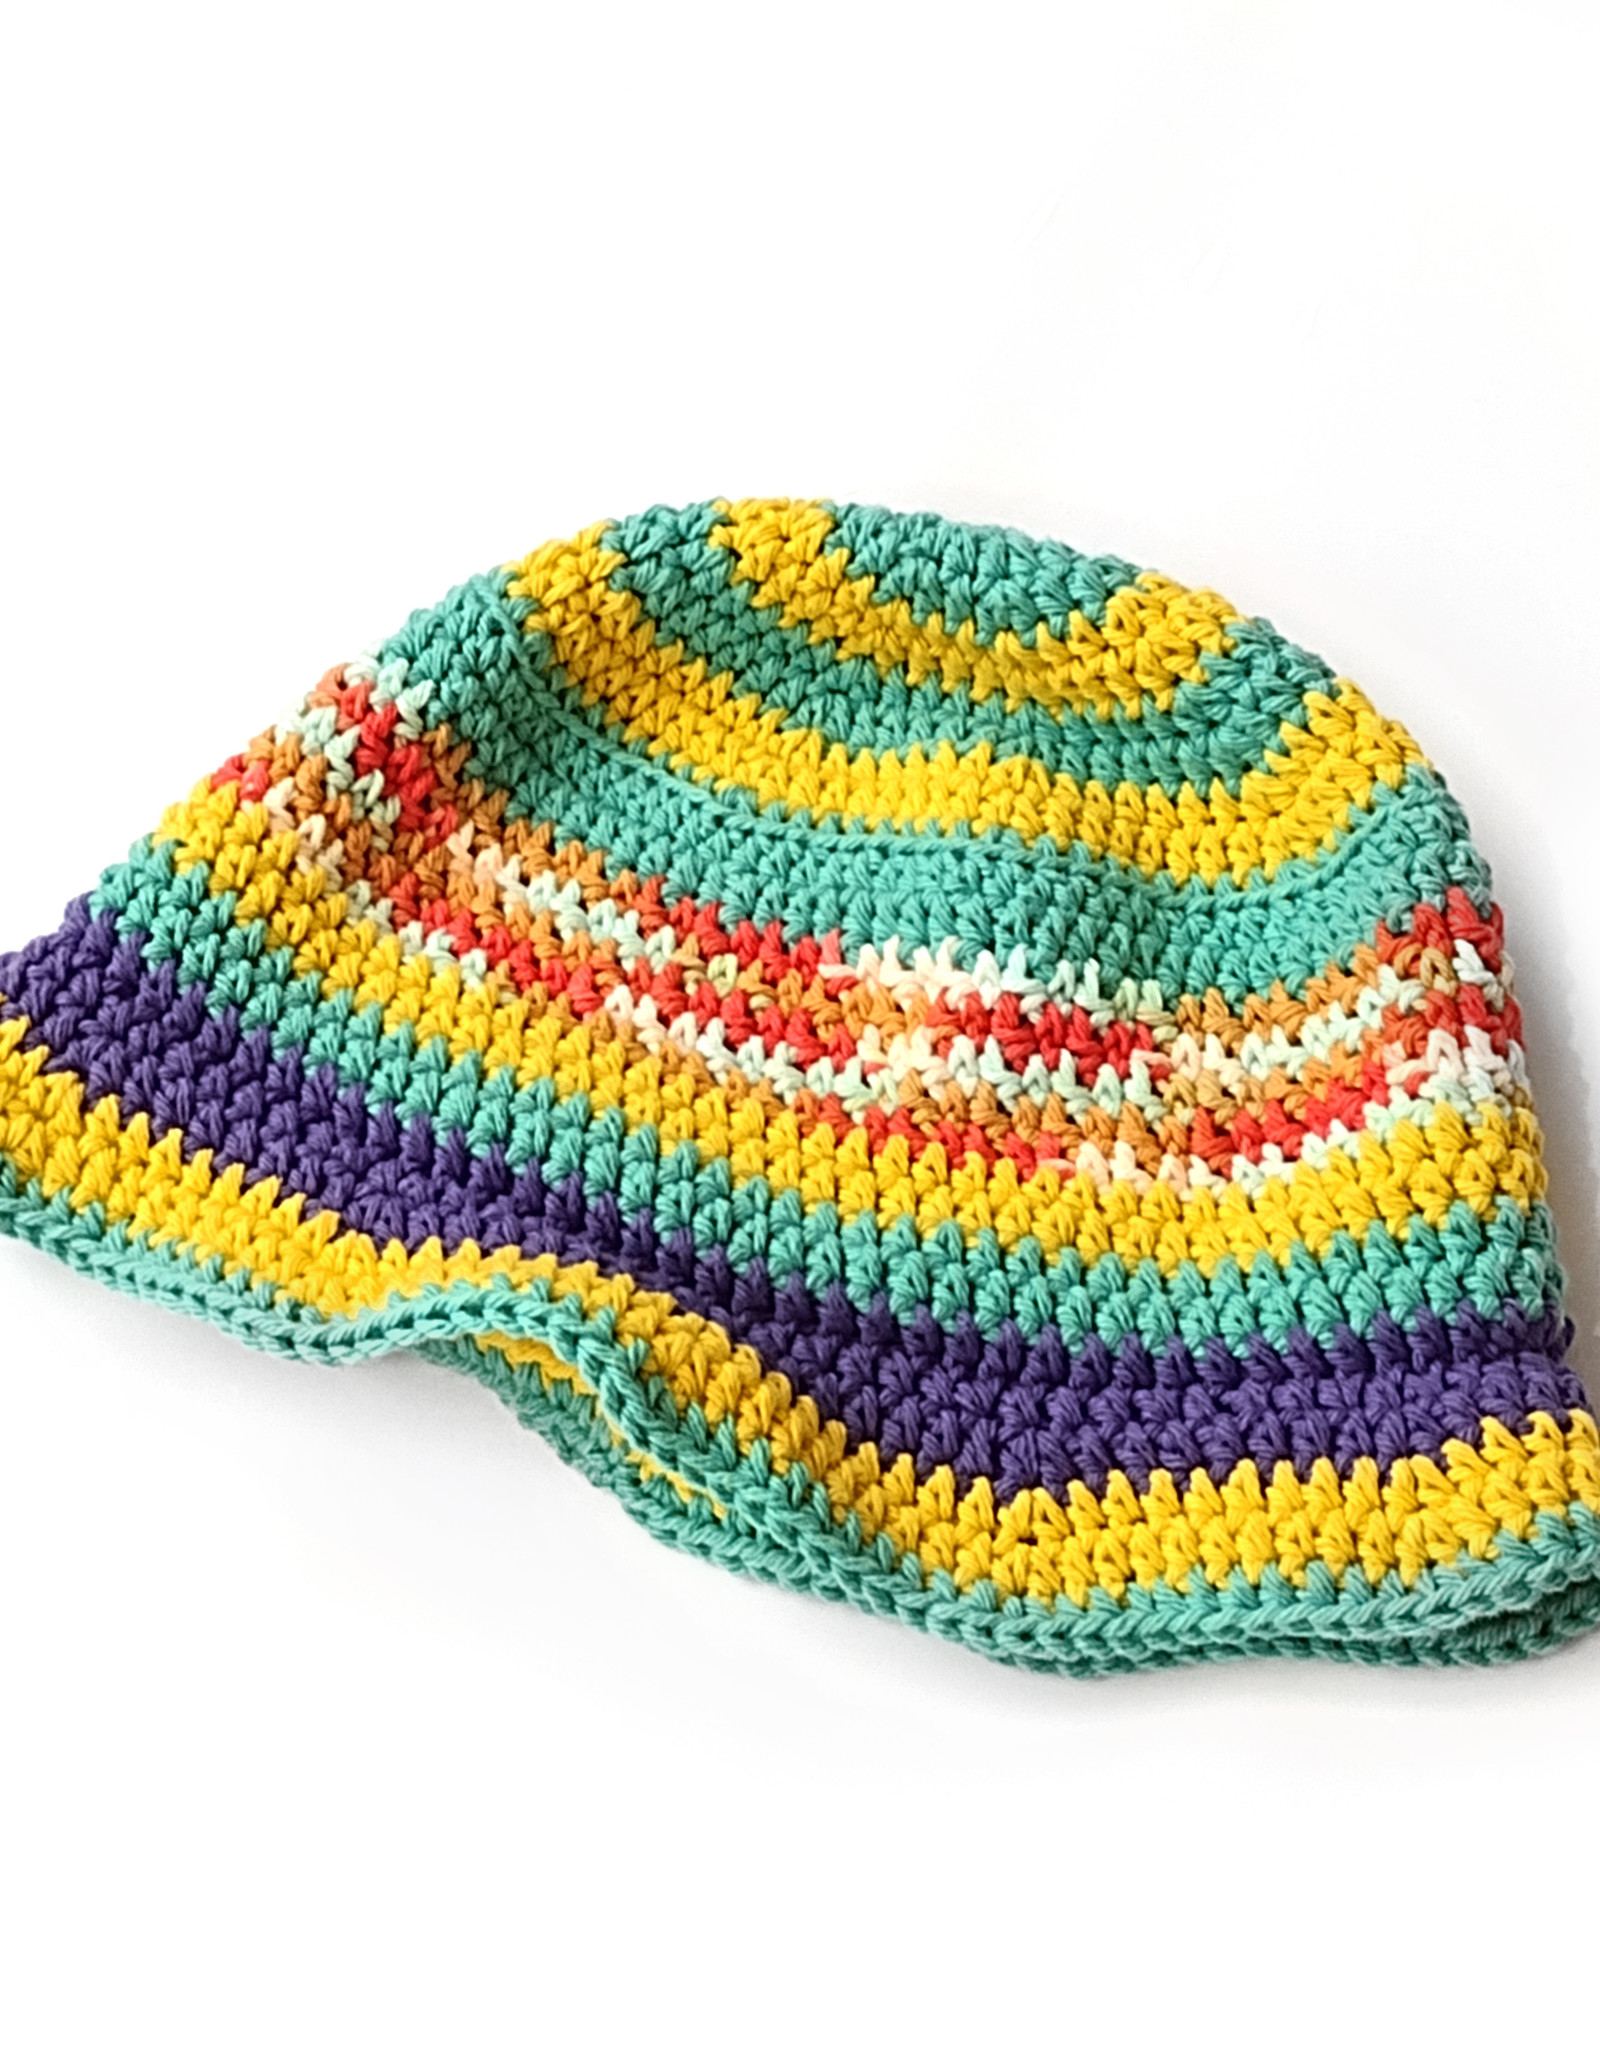 Crochet By Shelby Multicolored Crochet Bucket Hat by Shelby Olson